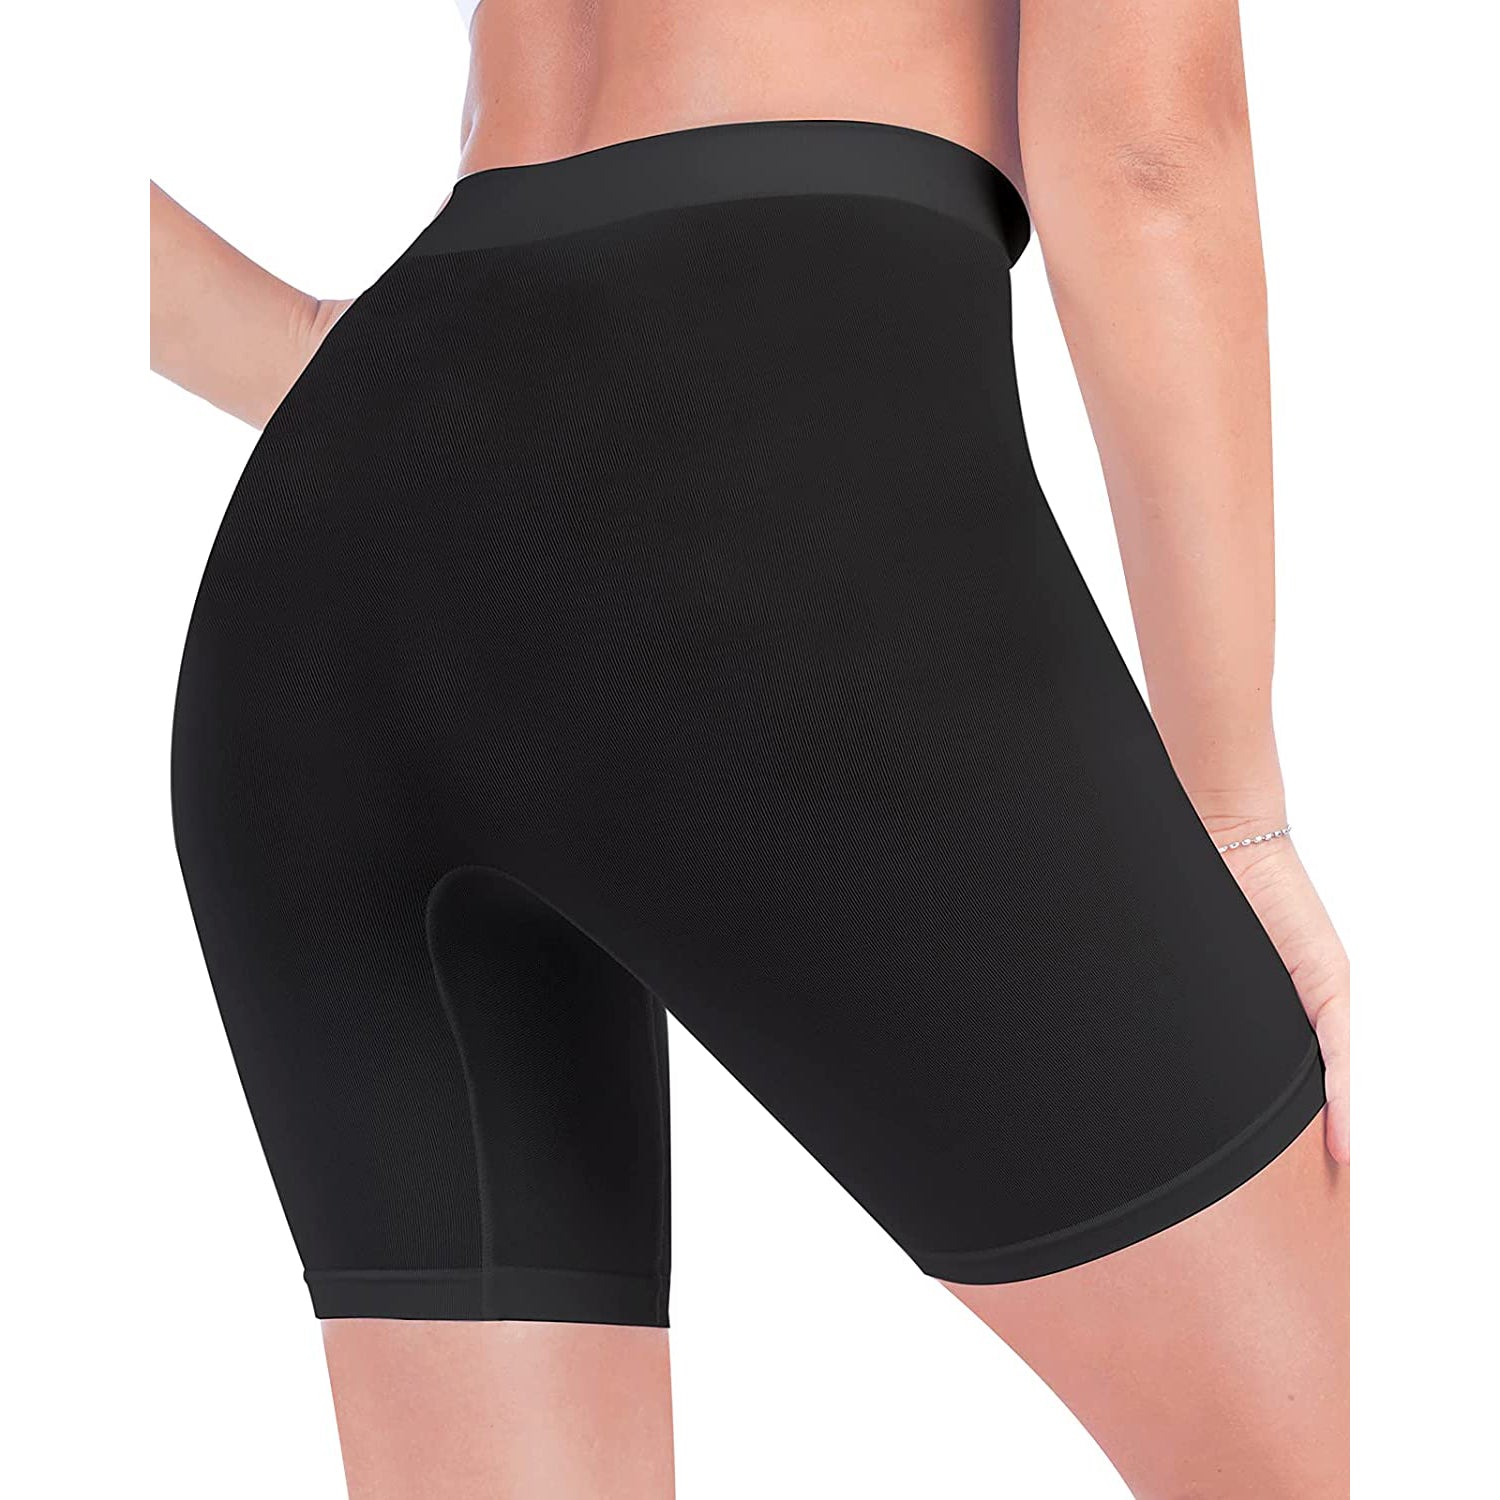  Slip Shorts For Women,3 Pack Comfortable Seamless Smooth Slip  Shorts For Under Dresses